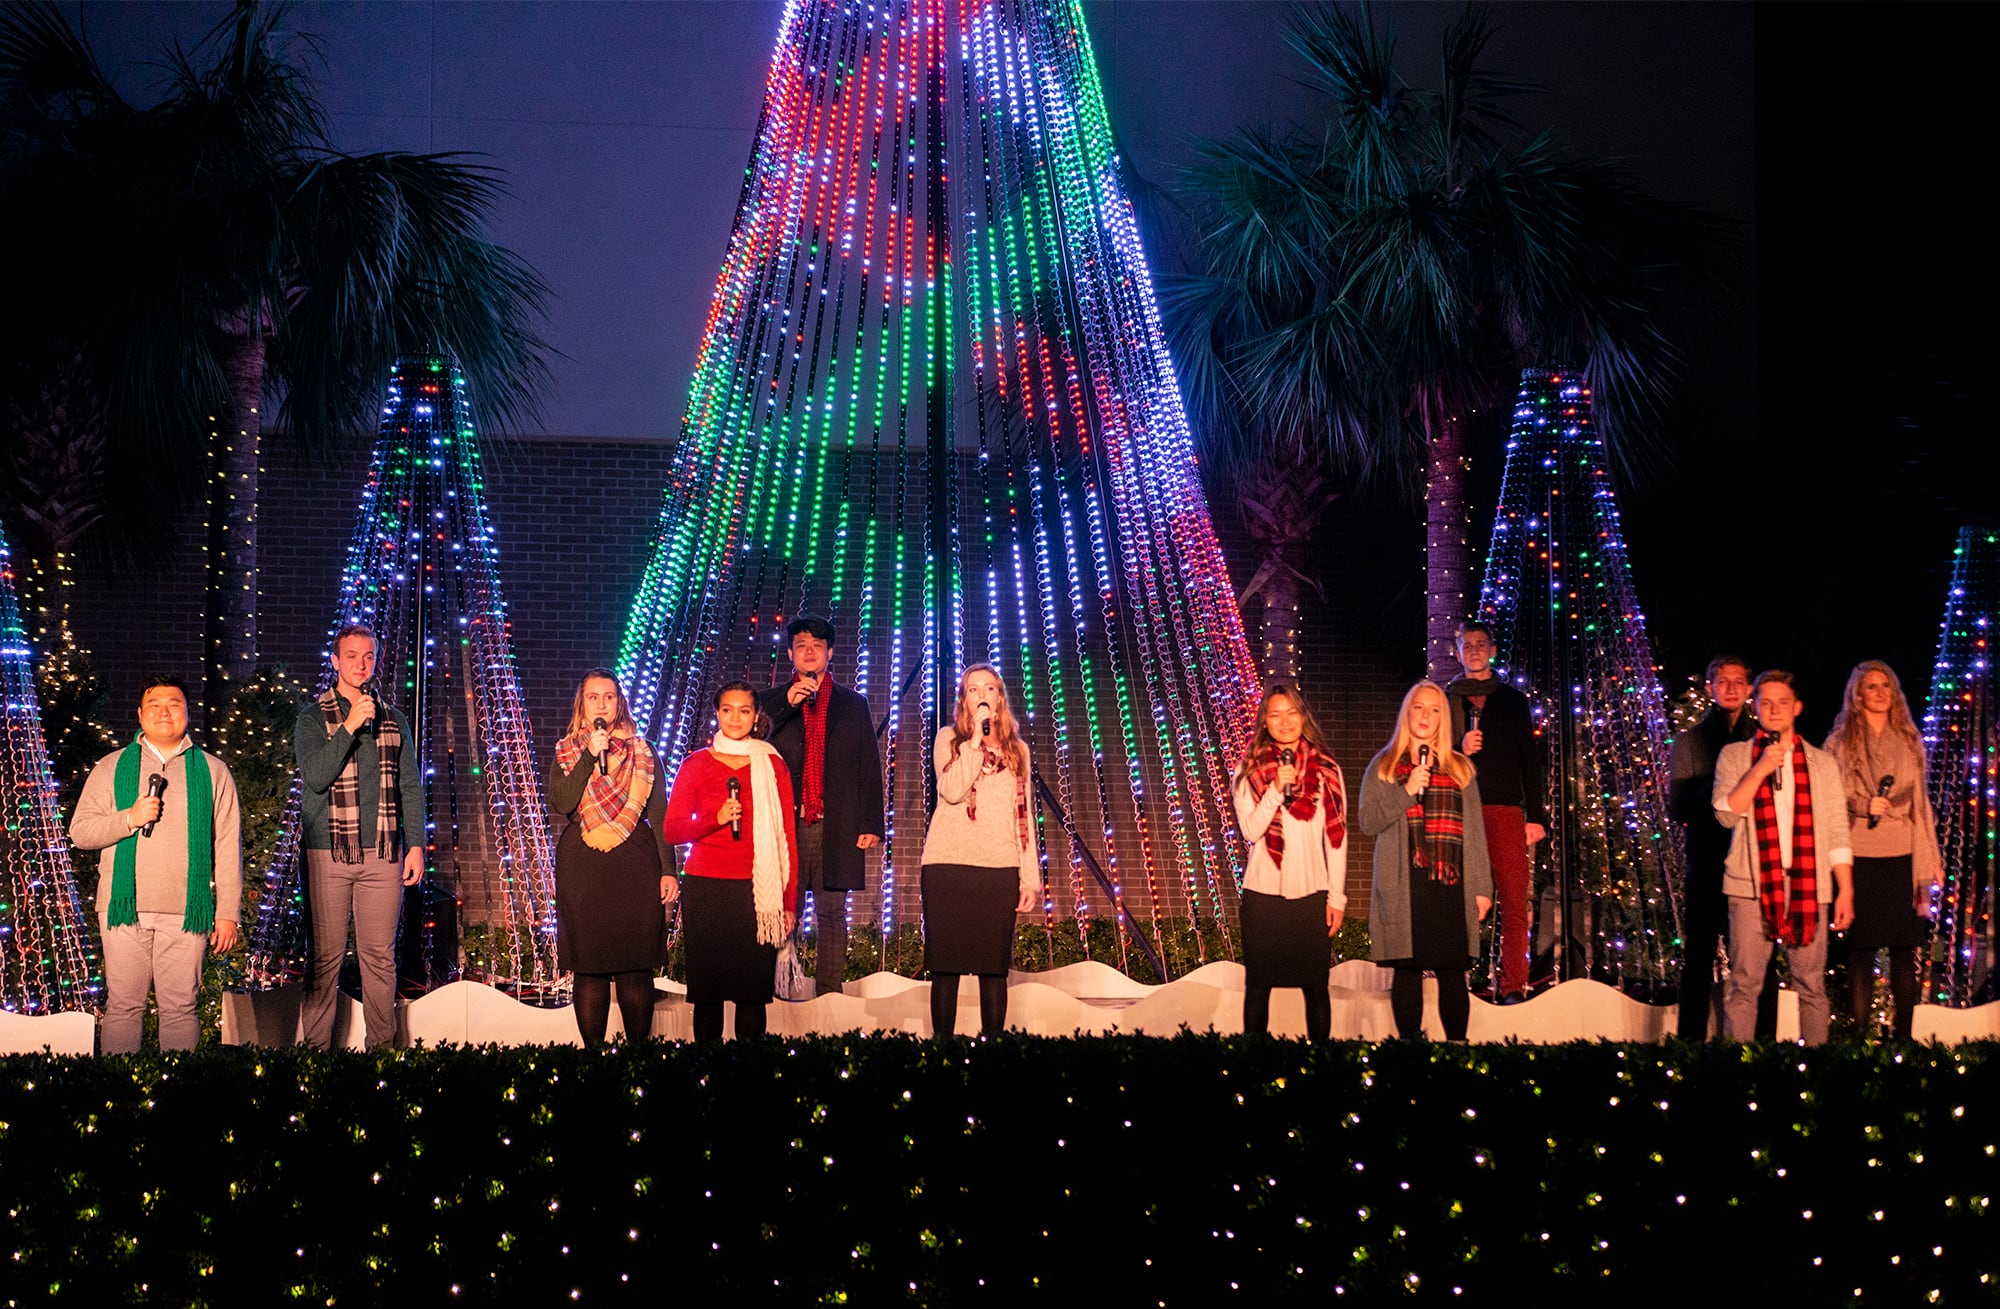 Spirit Singers sing in this year's virtual Christmas Lights